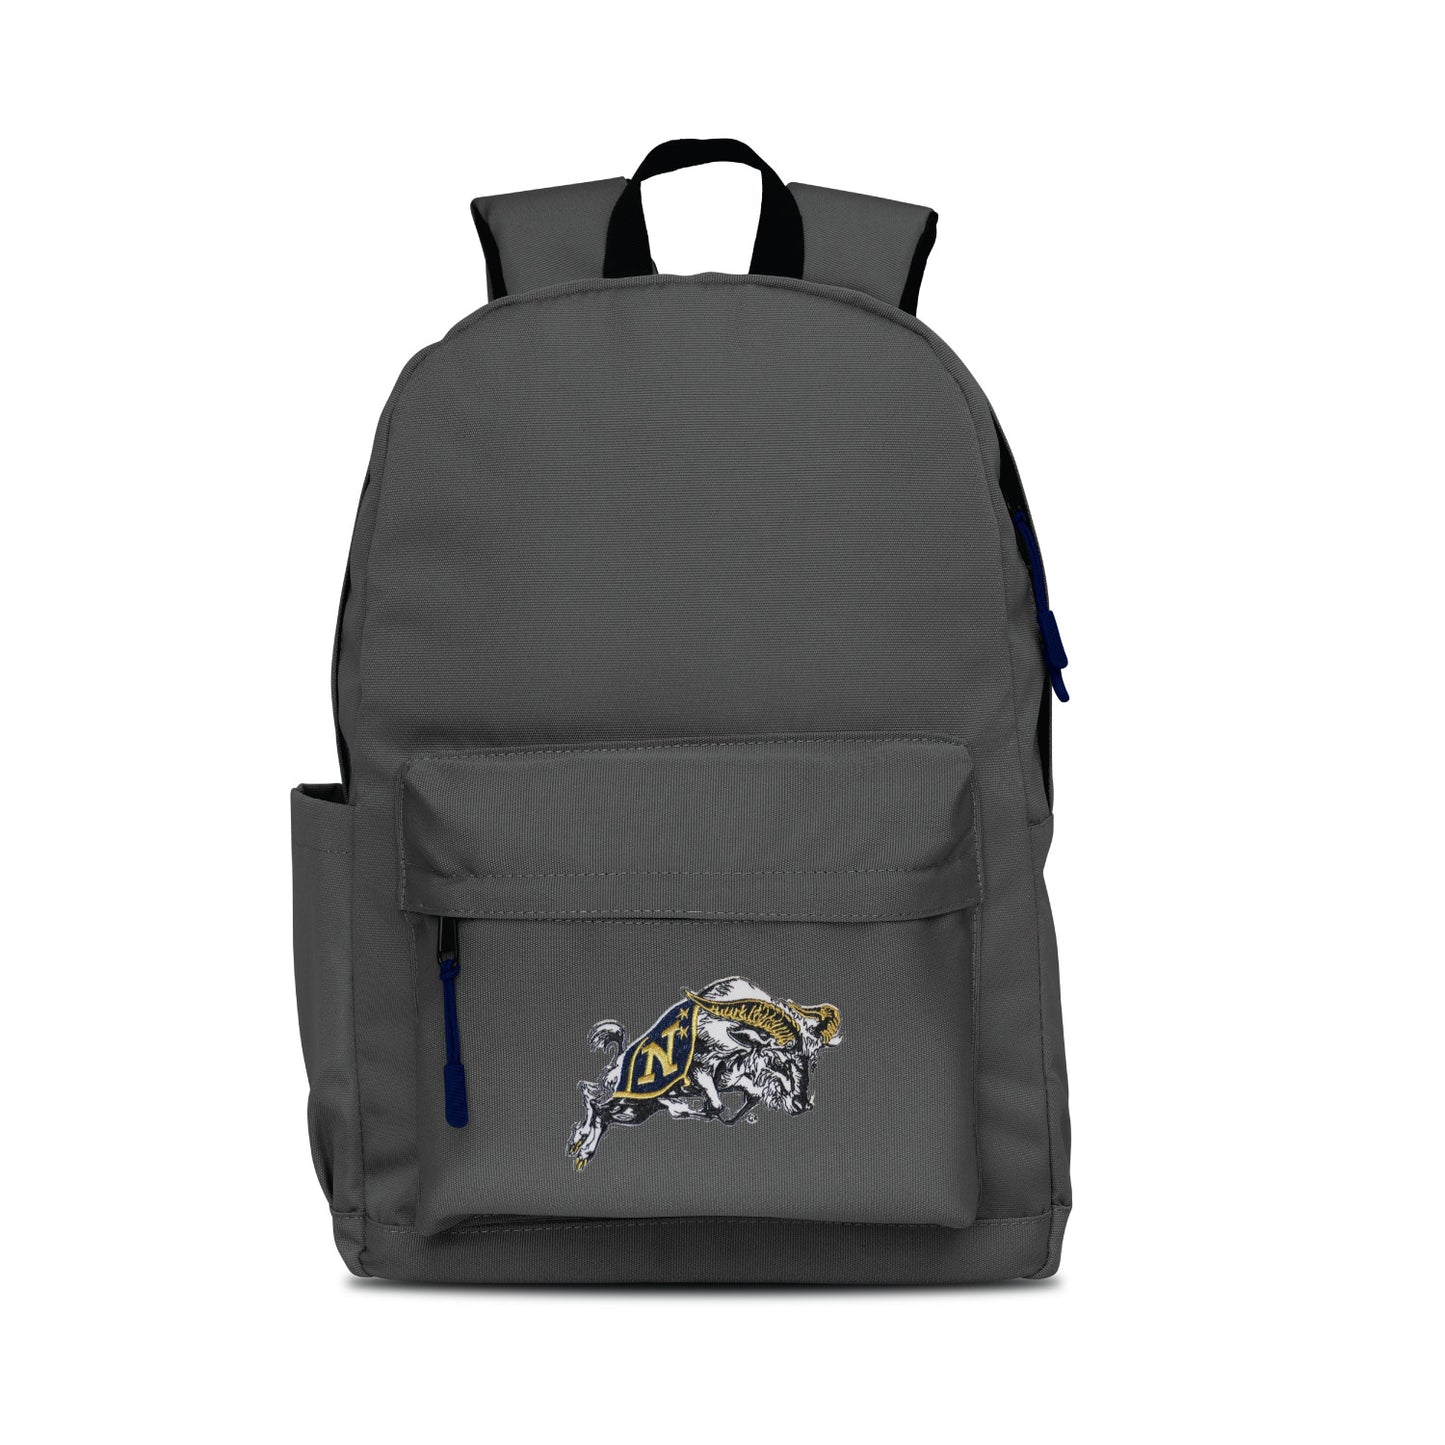 Navy Midshipmen Campus Laptop Backpack- Gray